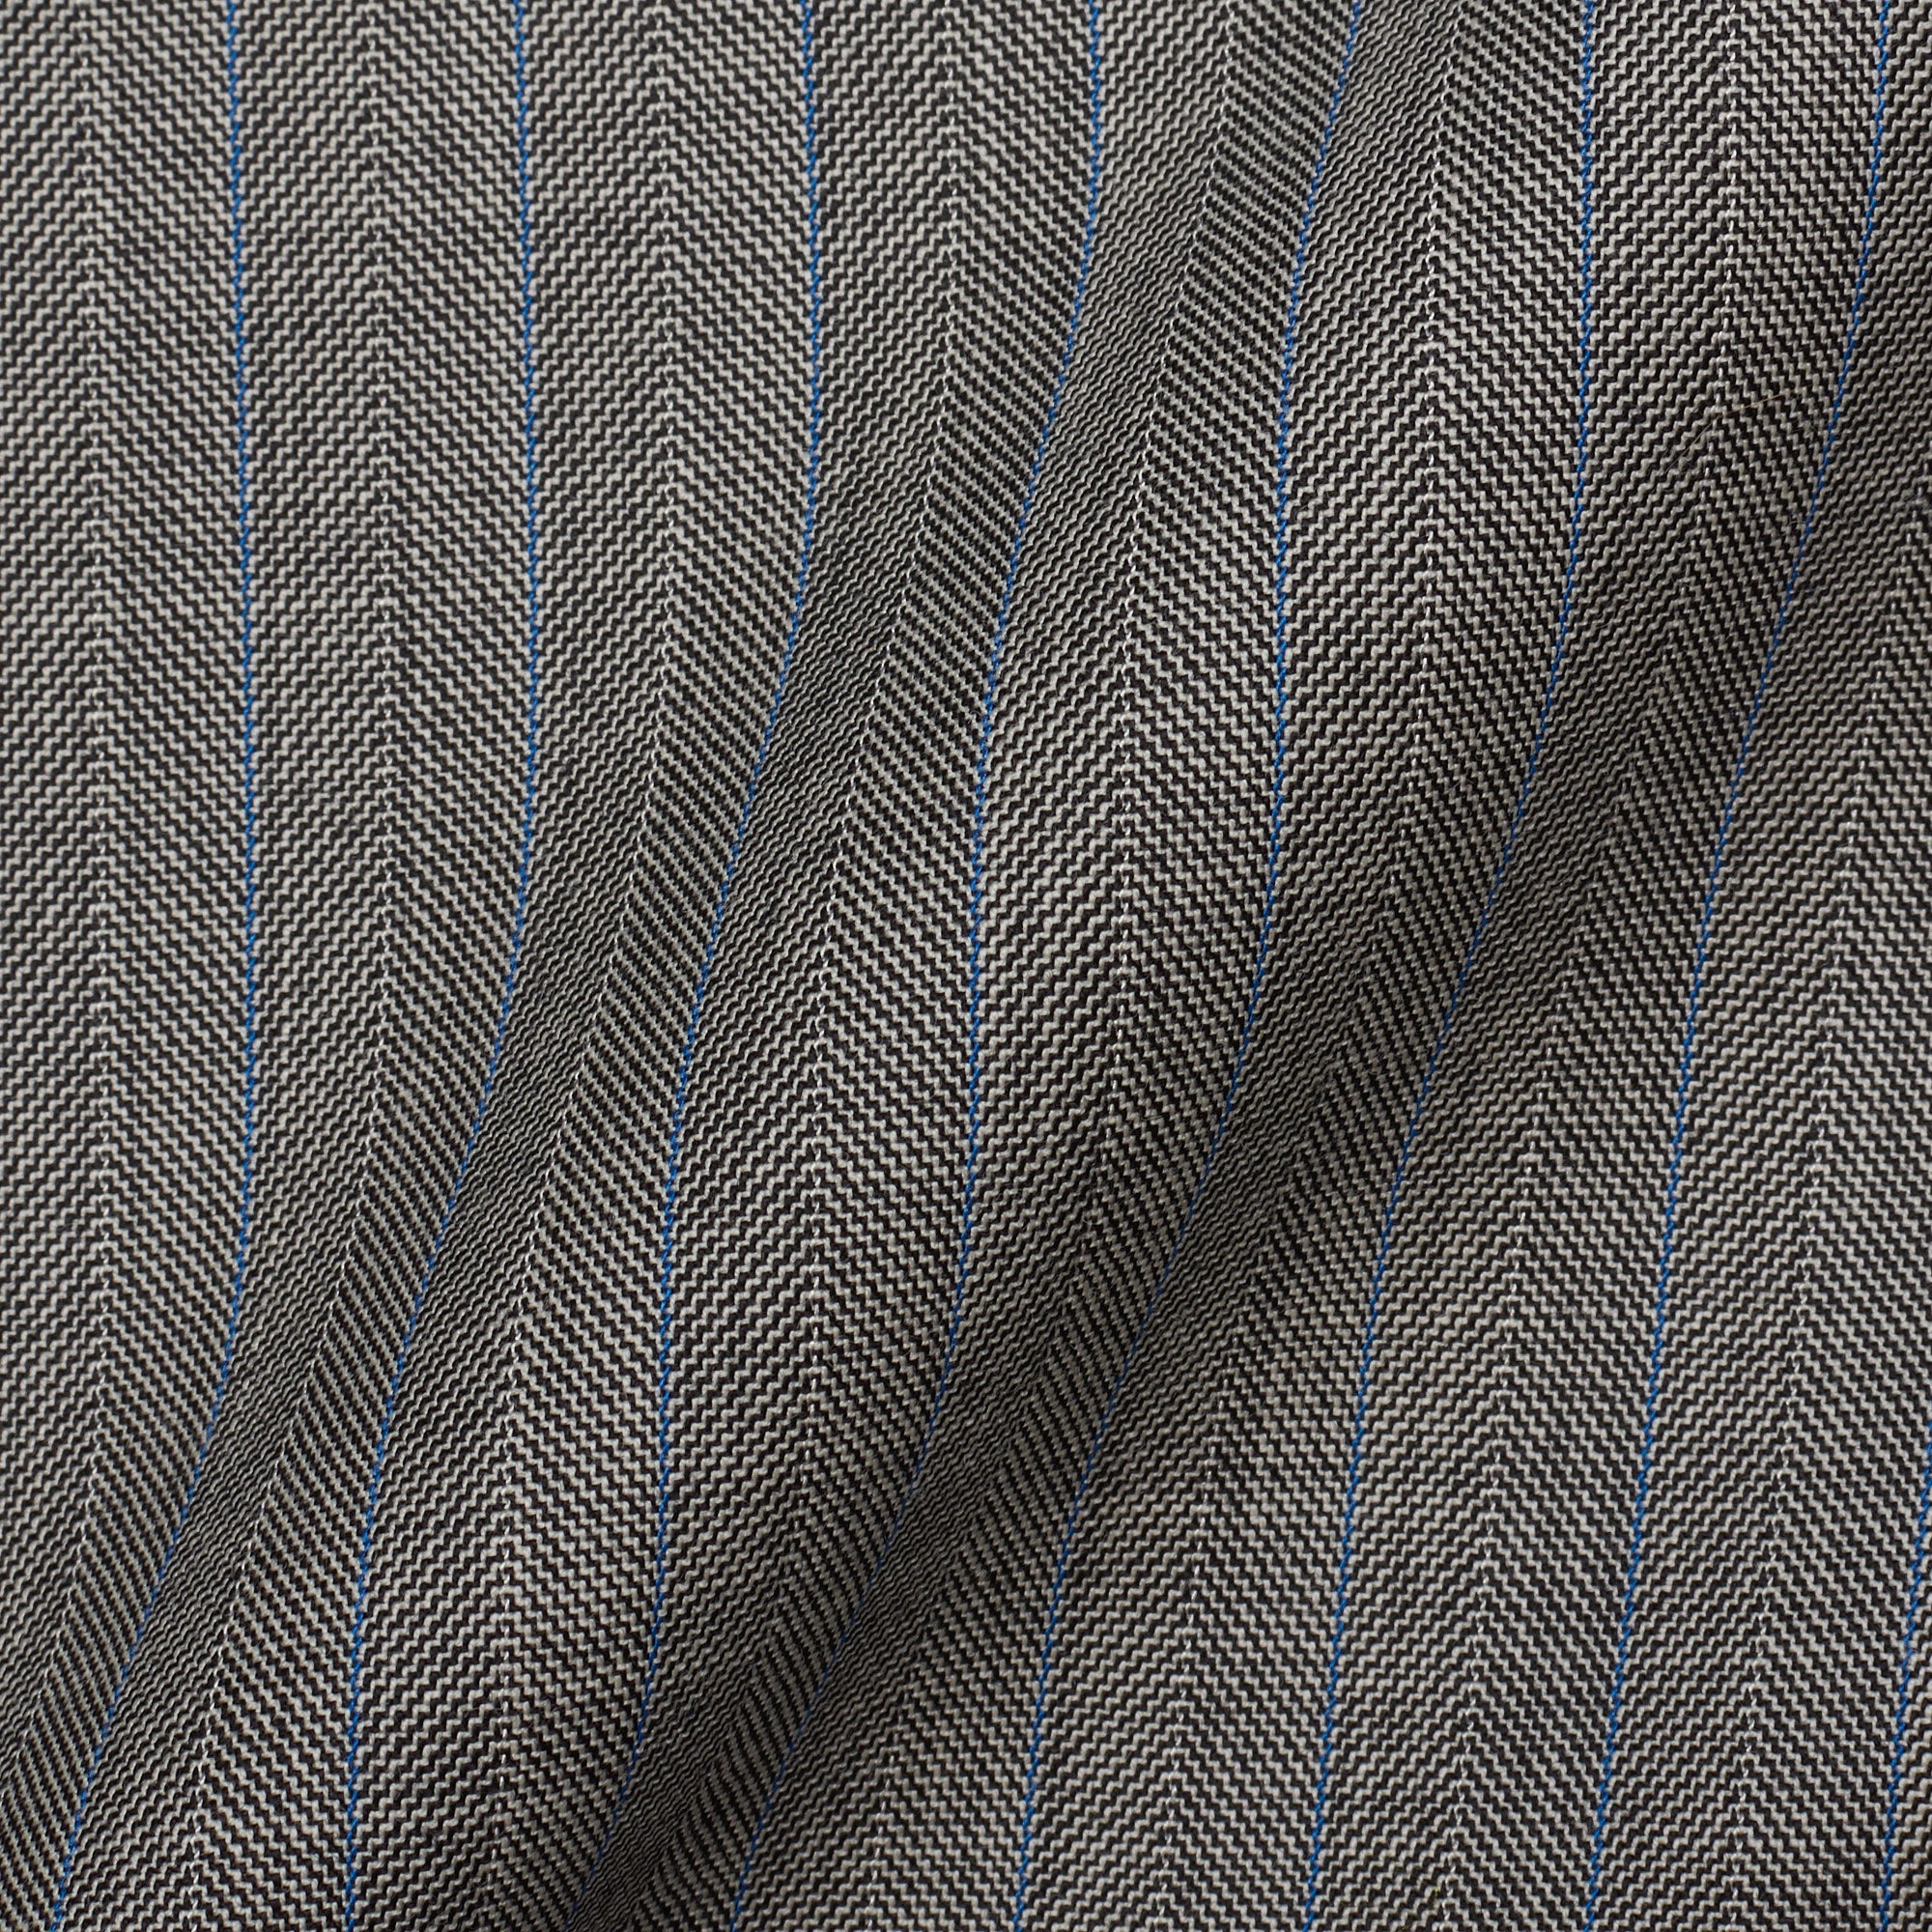 CESARE ATTOLINI Gray Herringbone Striped Wool Super 140's Suit EU 52 US 42